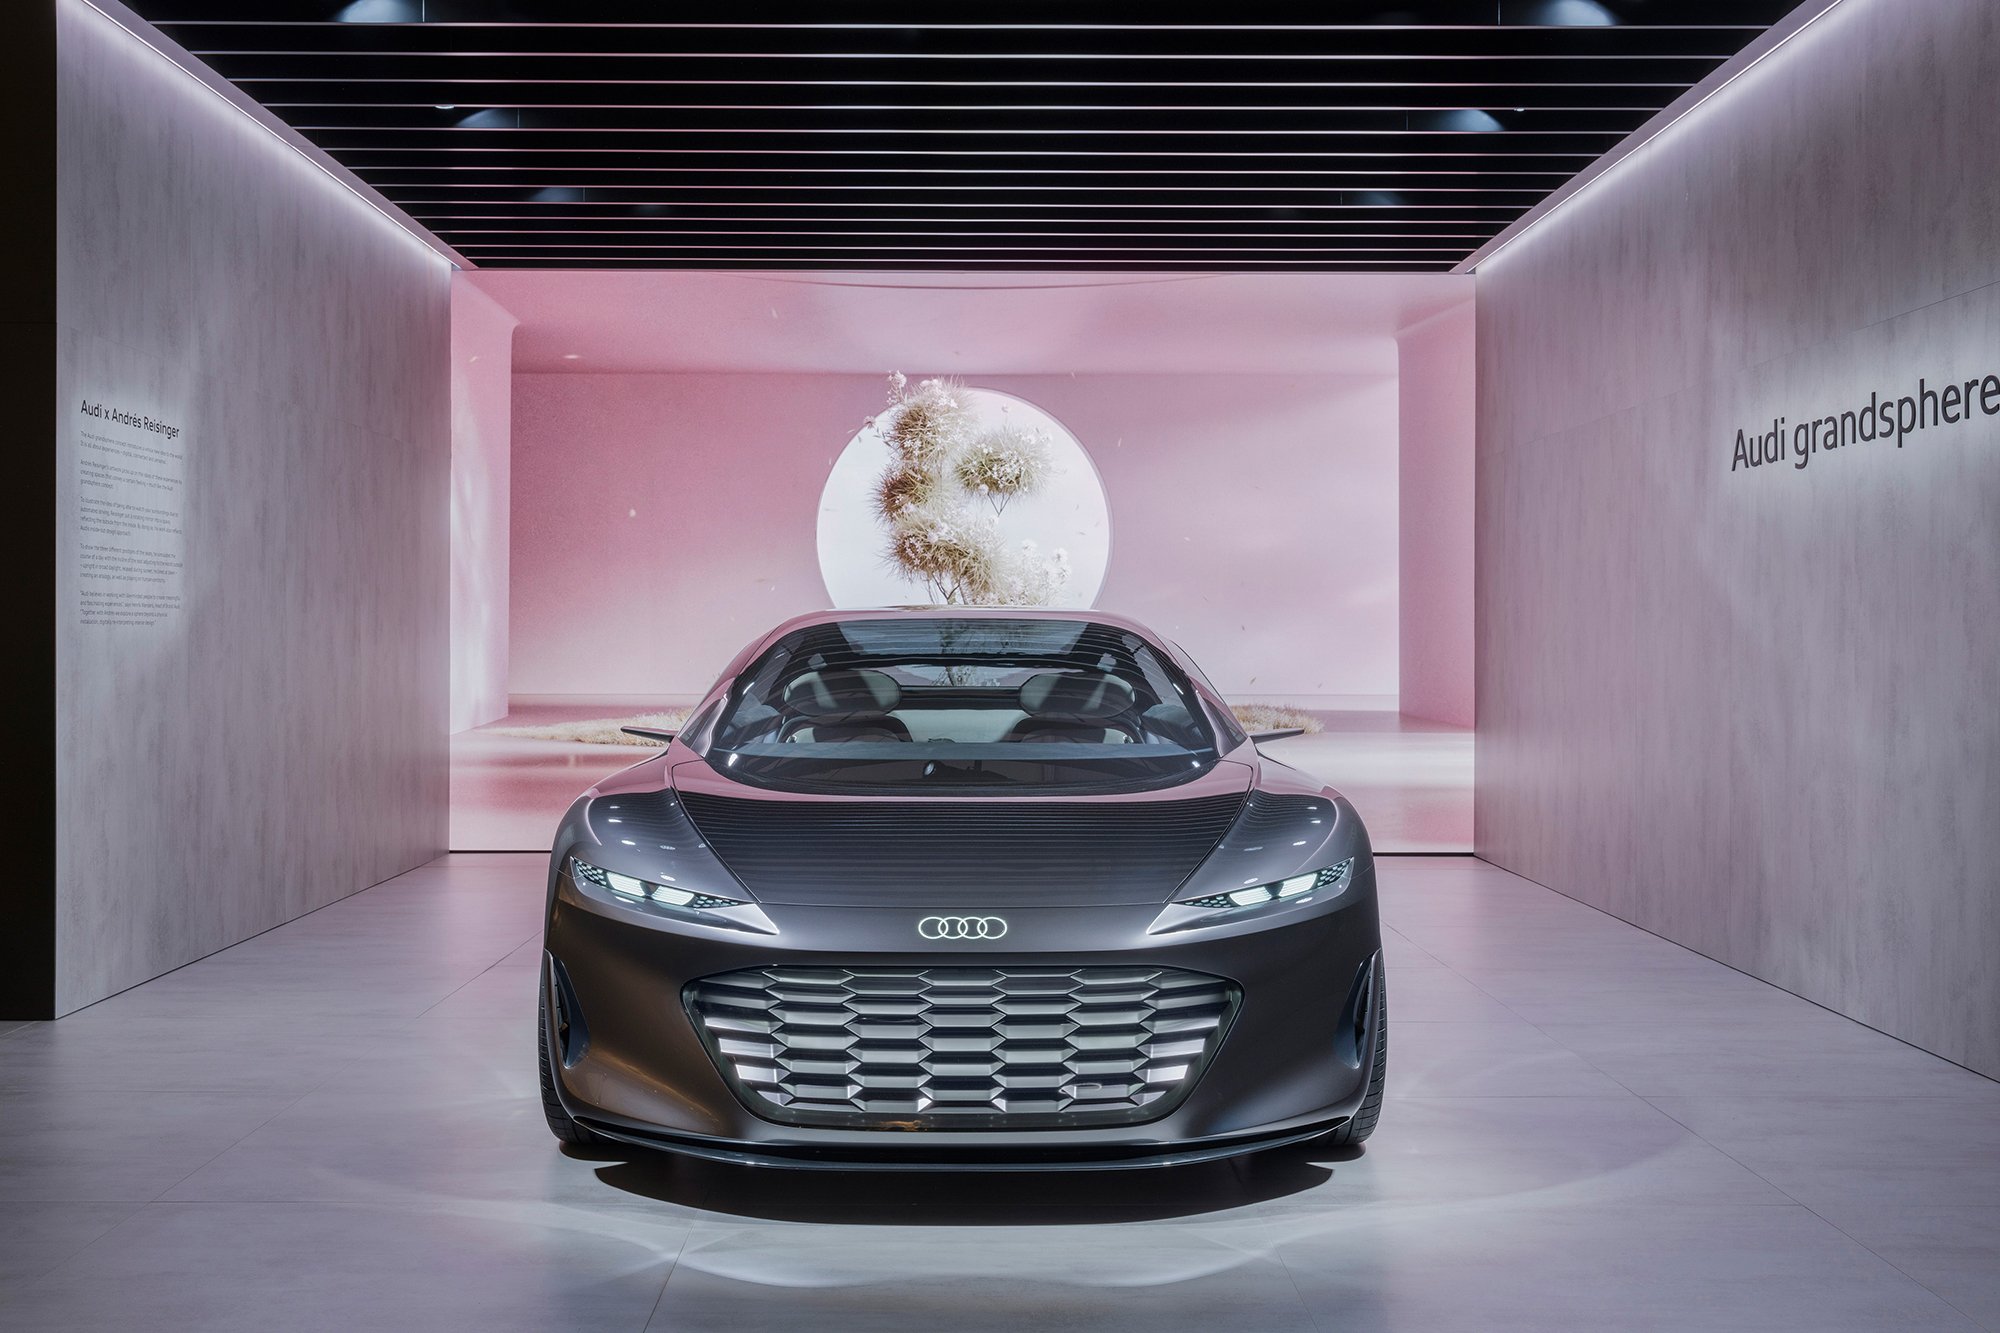 The Audi grandsphere concept at Design Miami